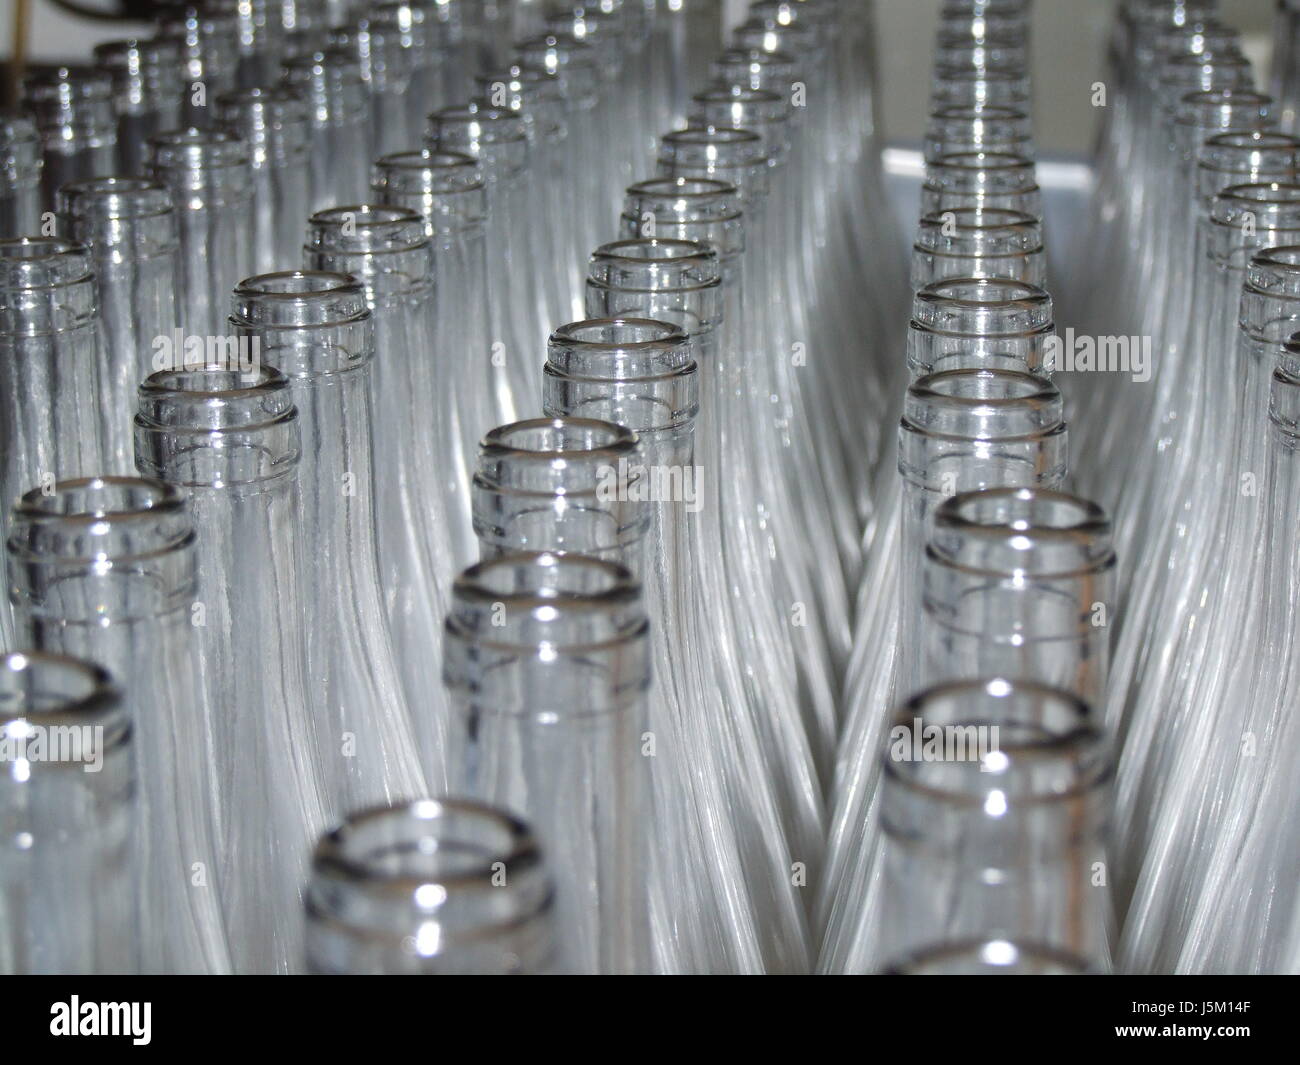 row bottle open viticulture wine bottle glassy bottle-neck conscious empty Stock Photo